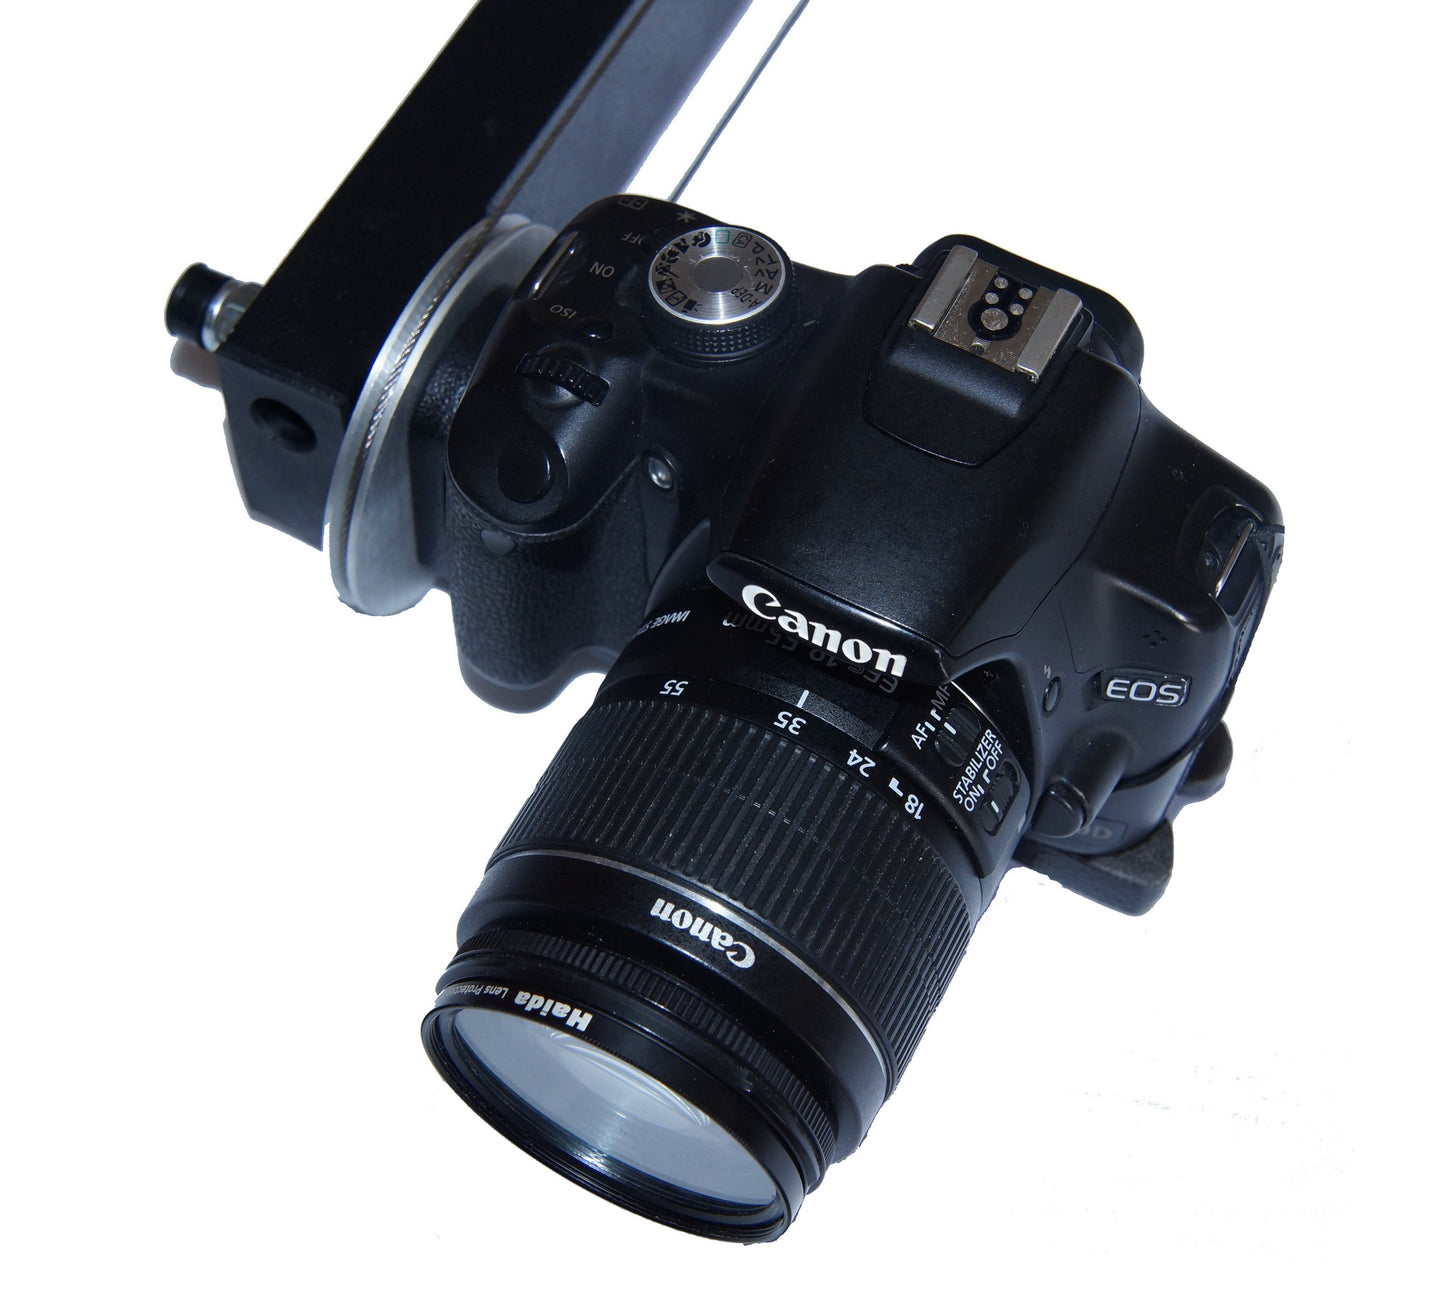 BackPacker UltraLite X - 8 foot Lightweight Camera Jib w/ Bag Set